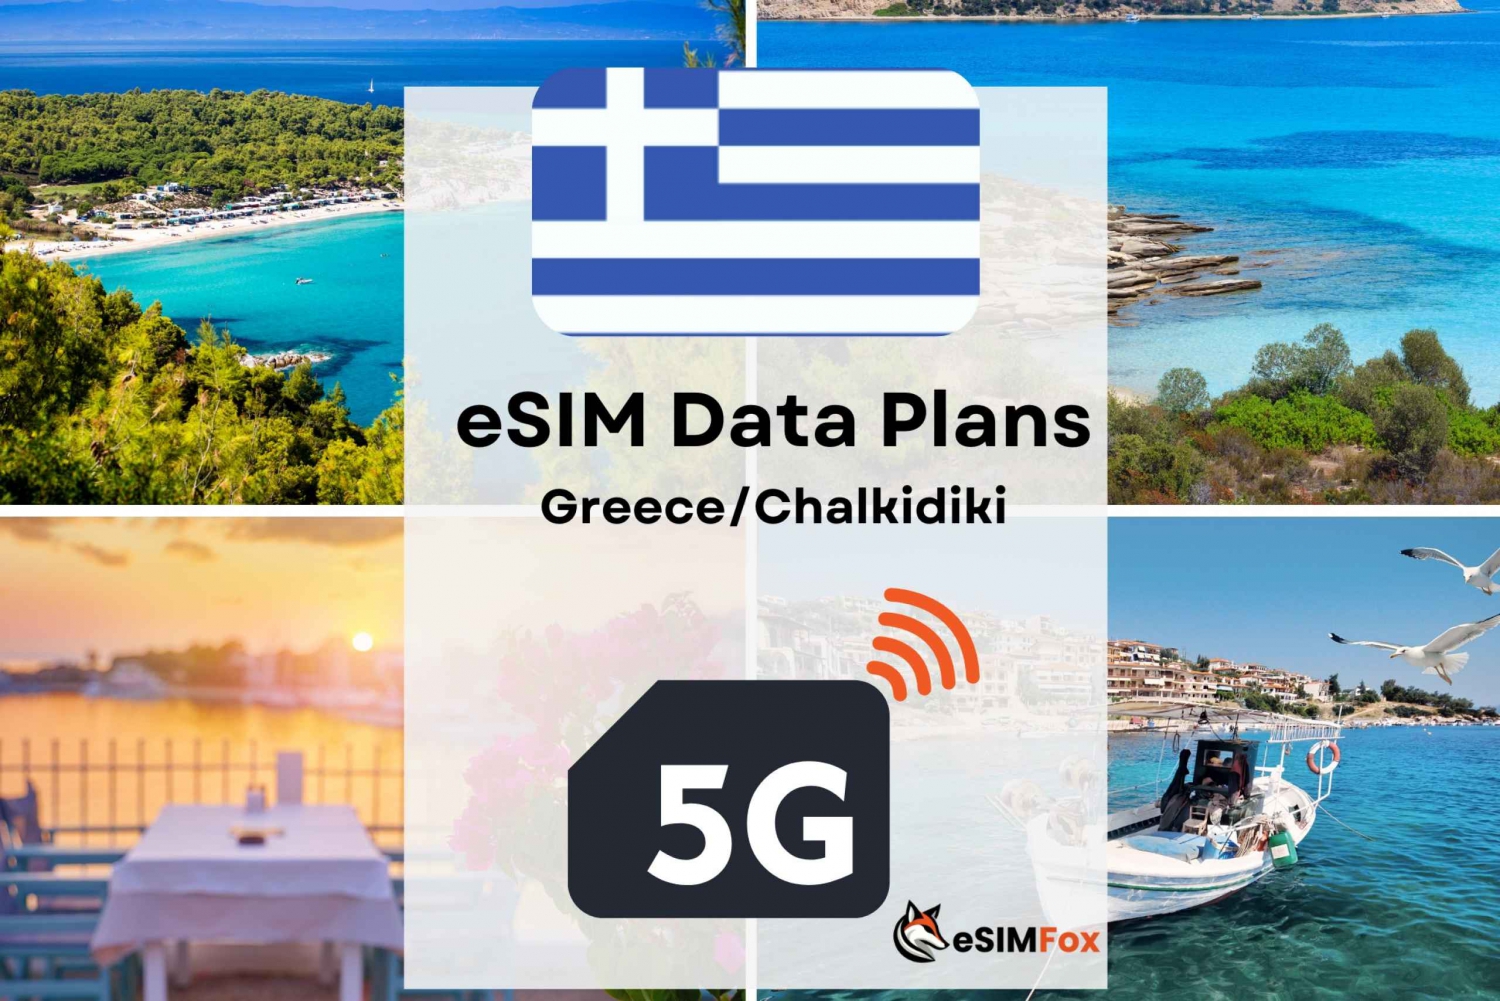 Chalkidiki : Grèce/Europe eSIM Internet Data Plan high speed